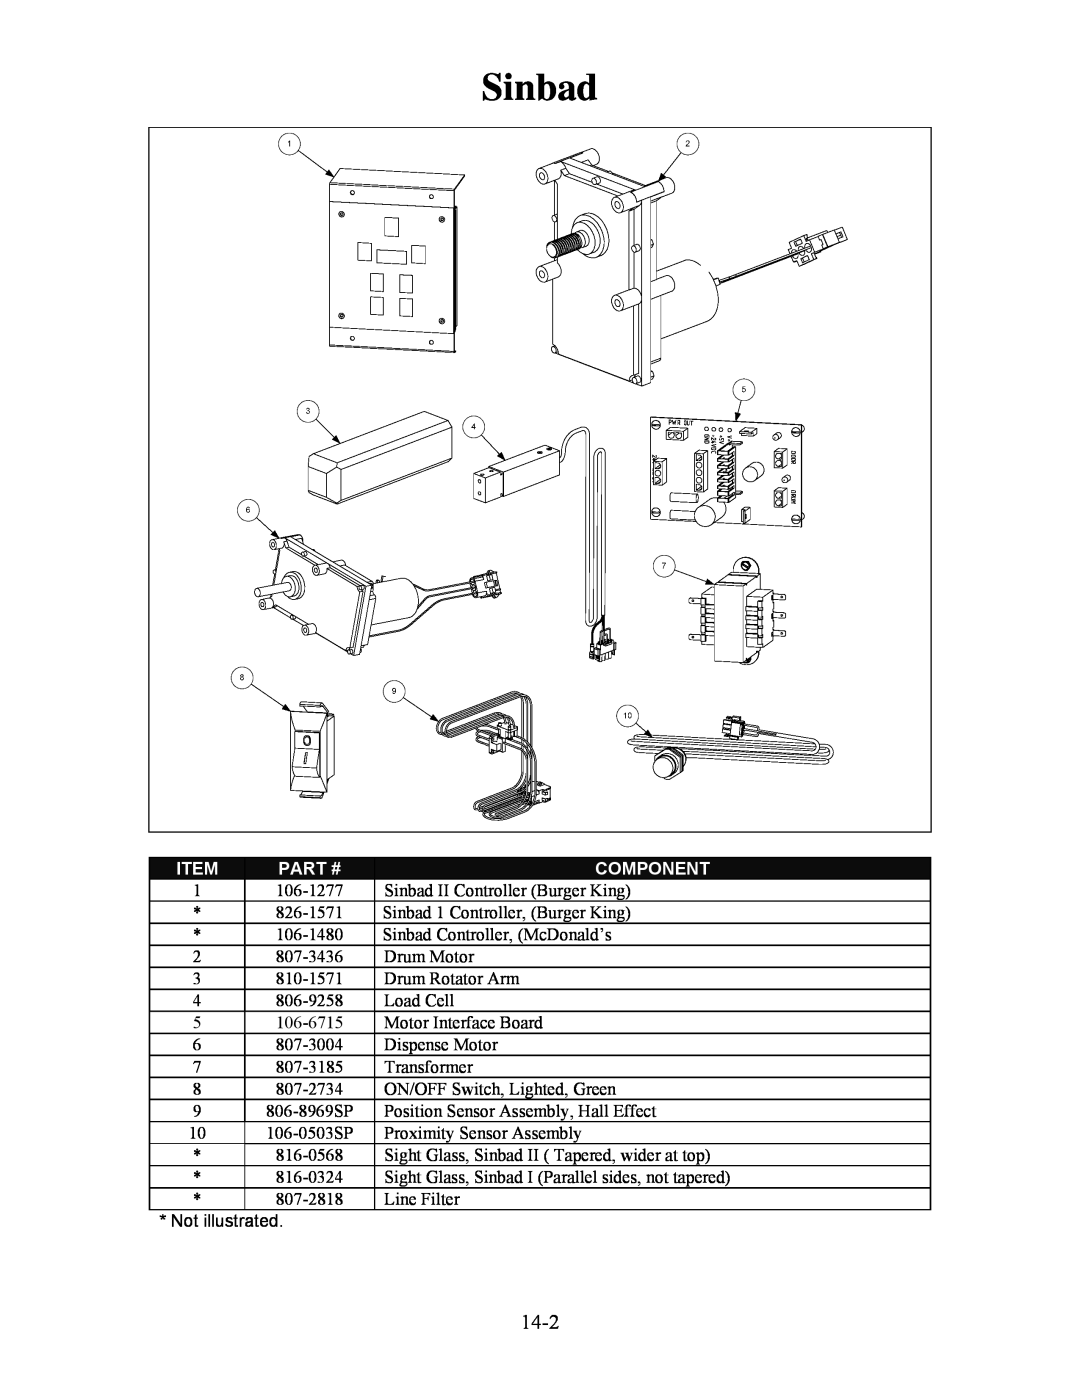 Frymaster H50 manual 14-2, Sinbad, Part #, Component 